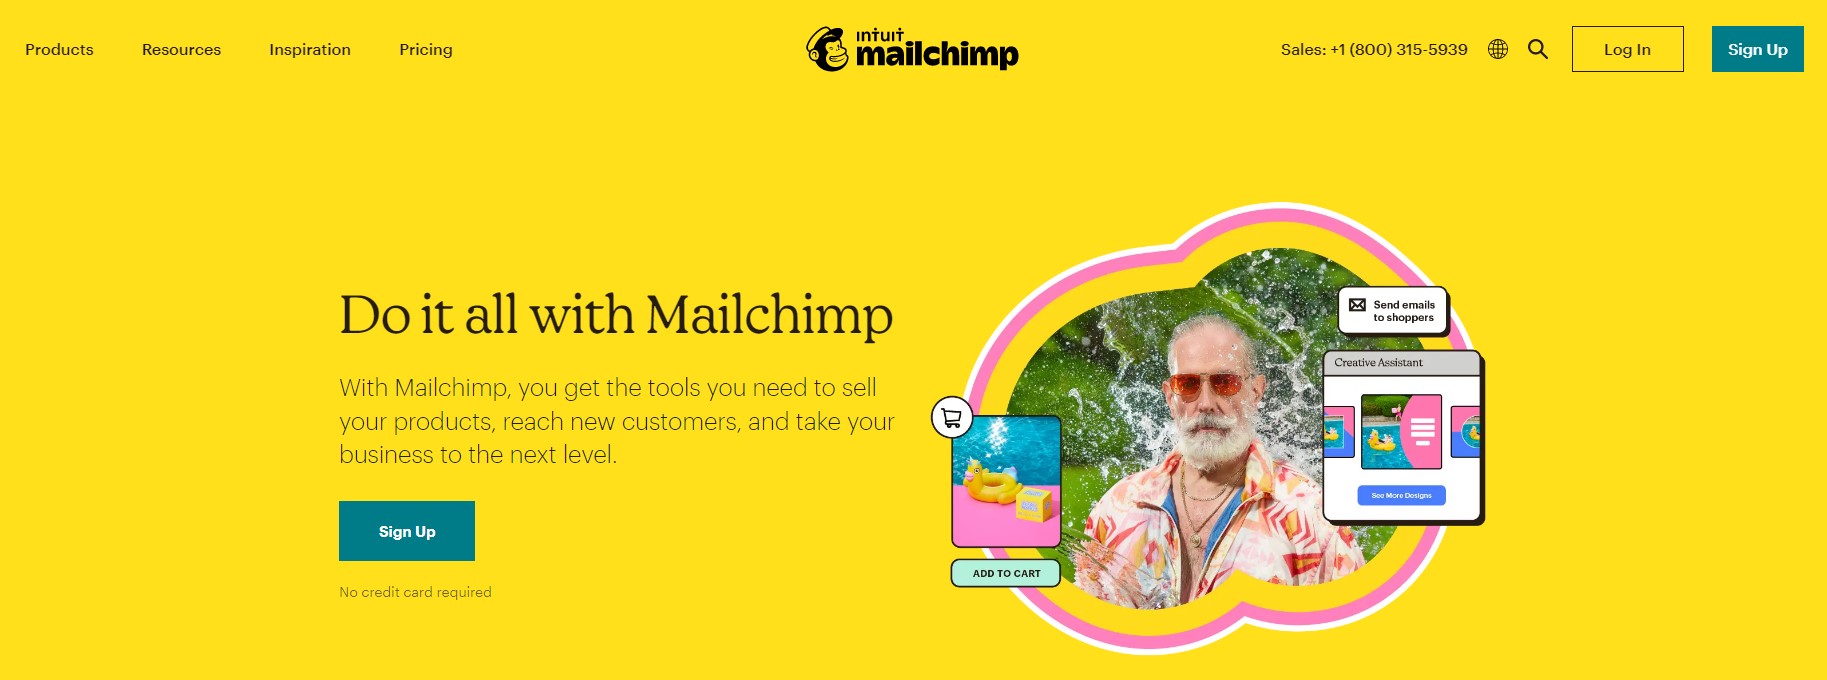 mailchimp email service